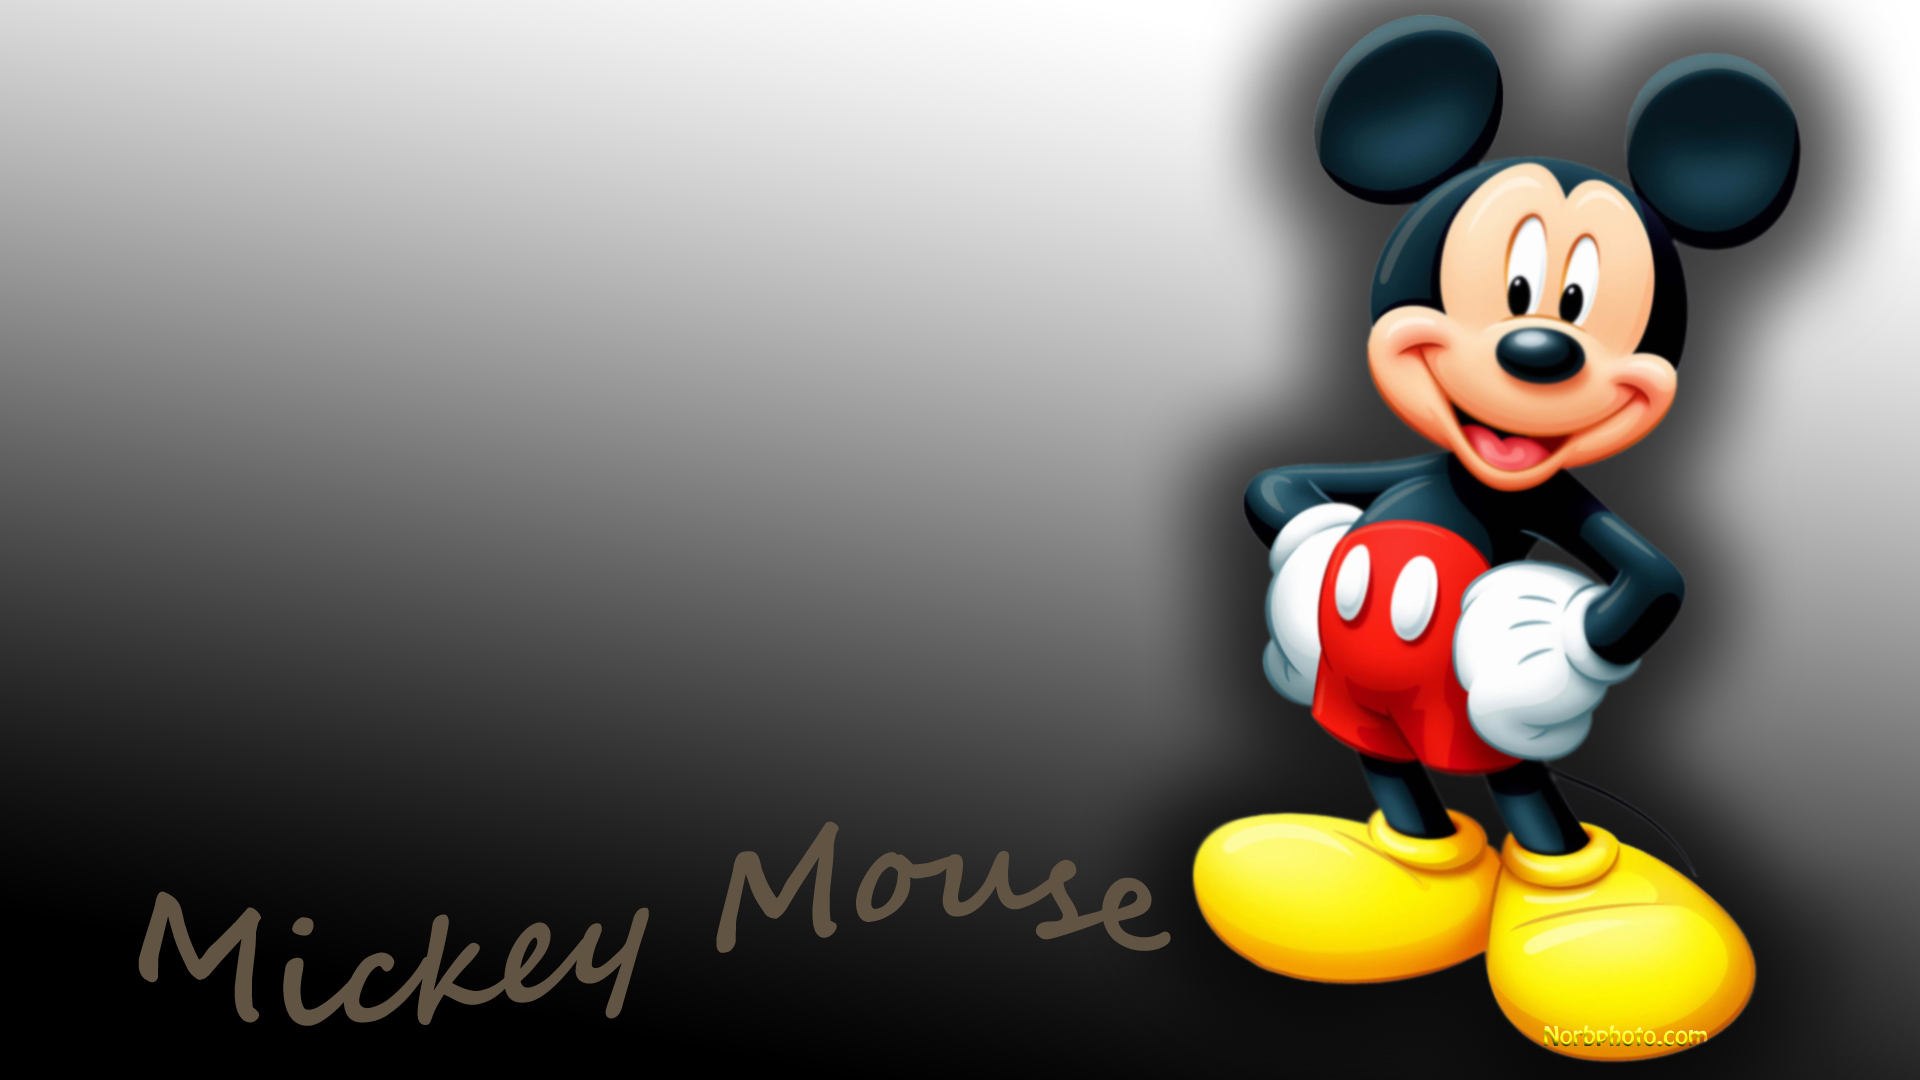 Mickey Mouse Disney Wallpaper